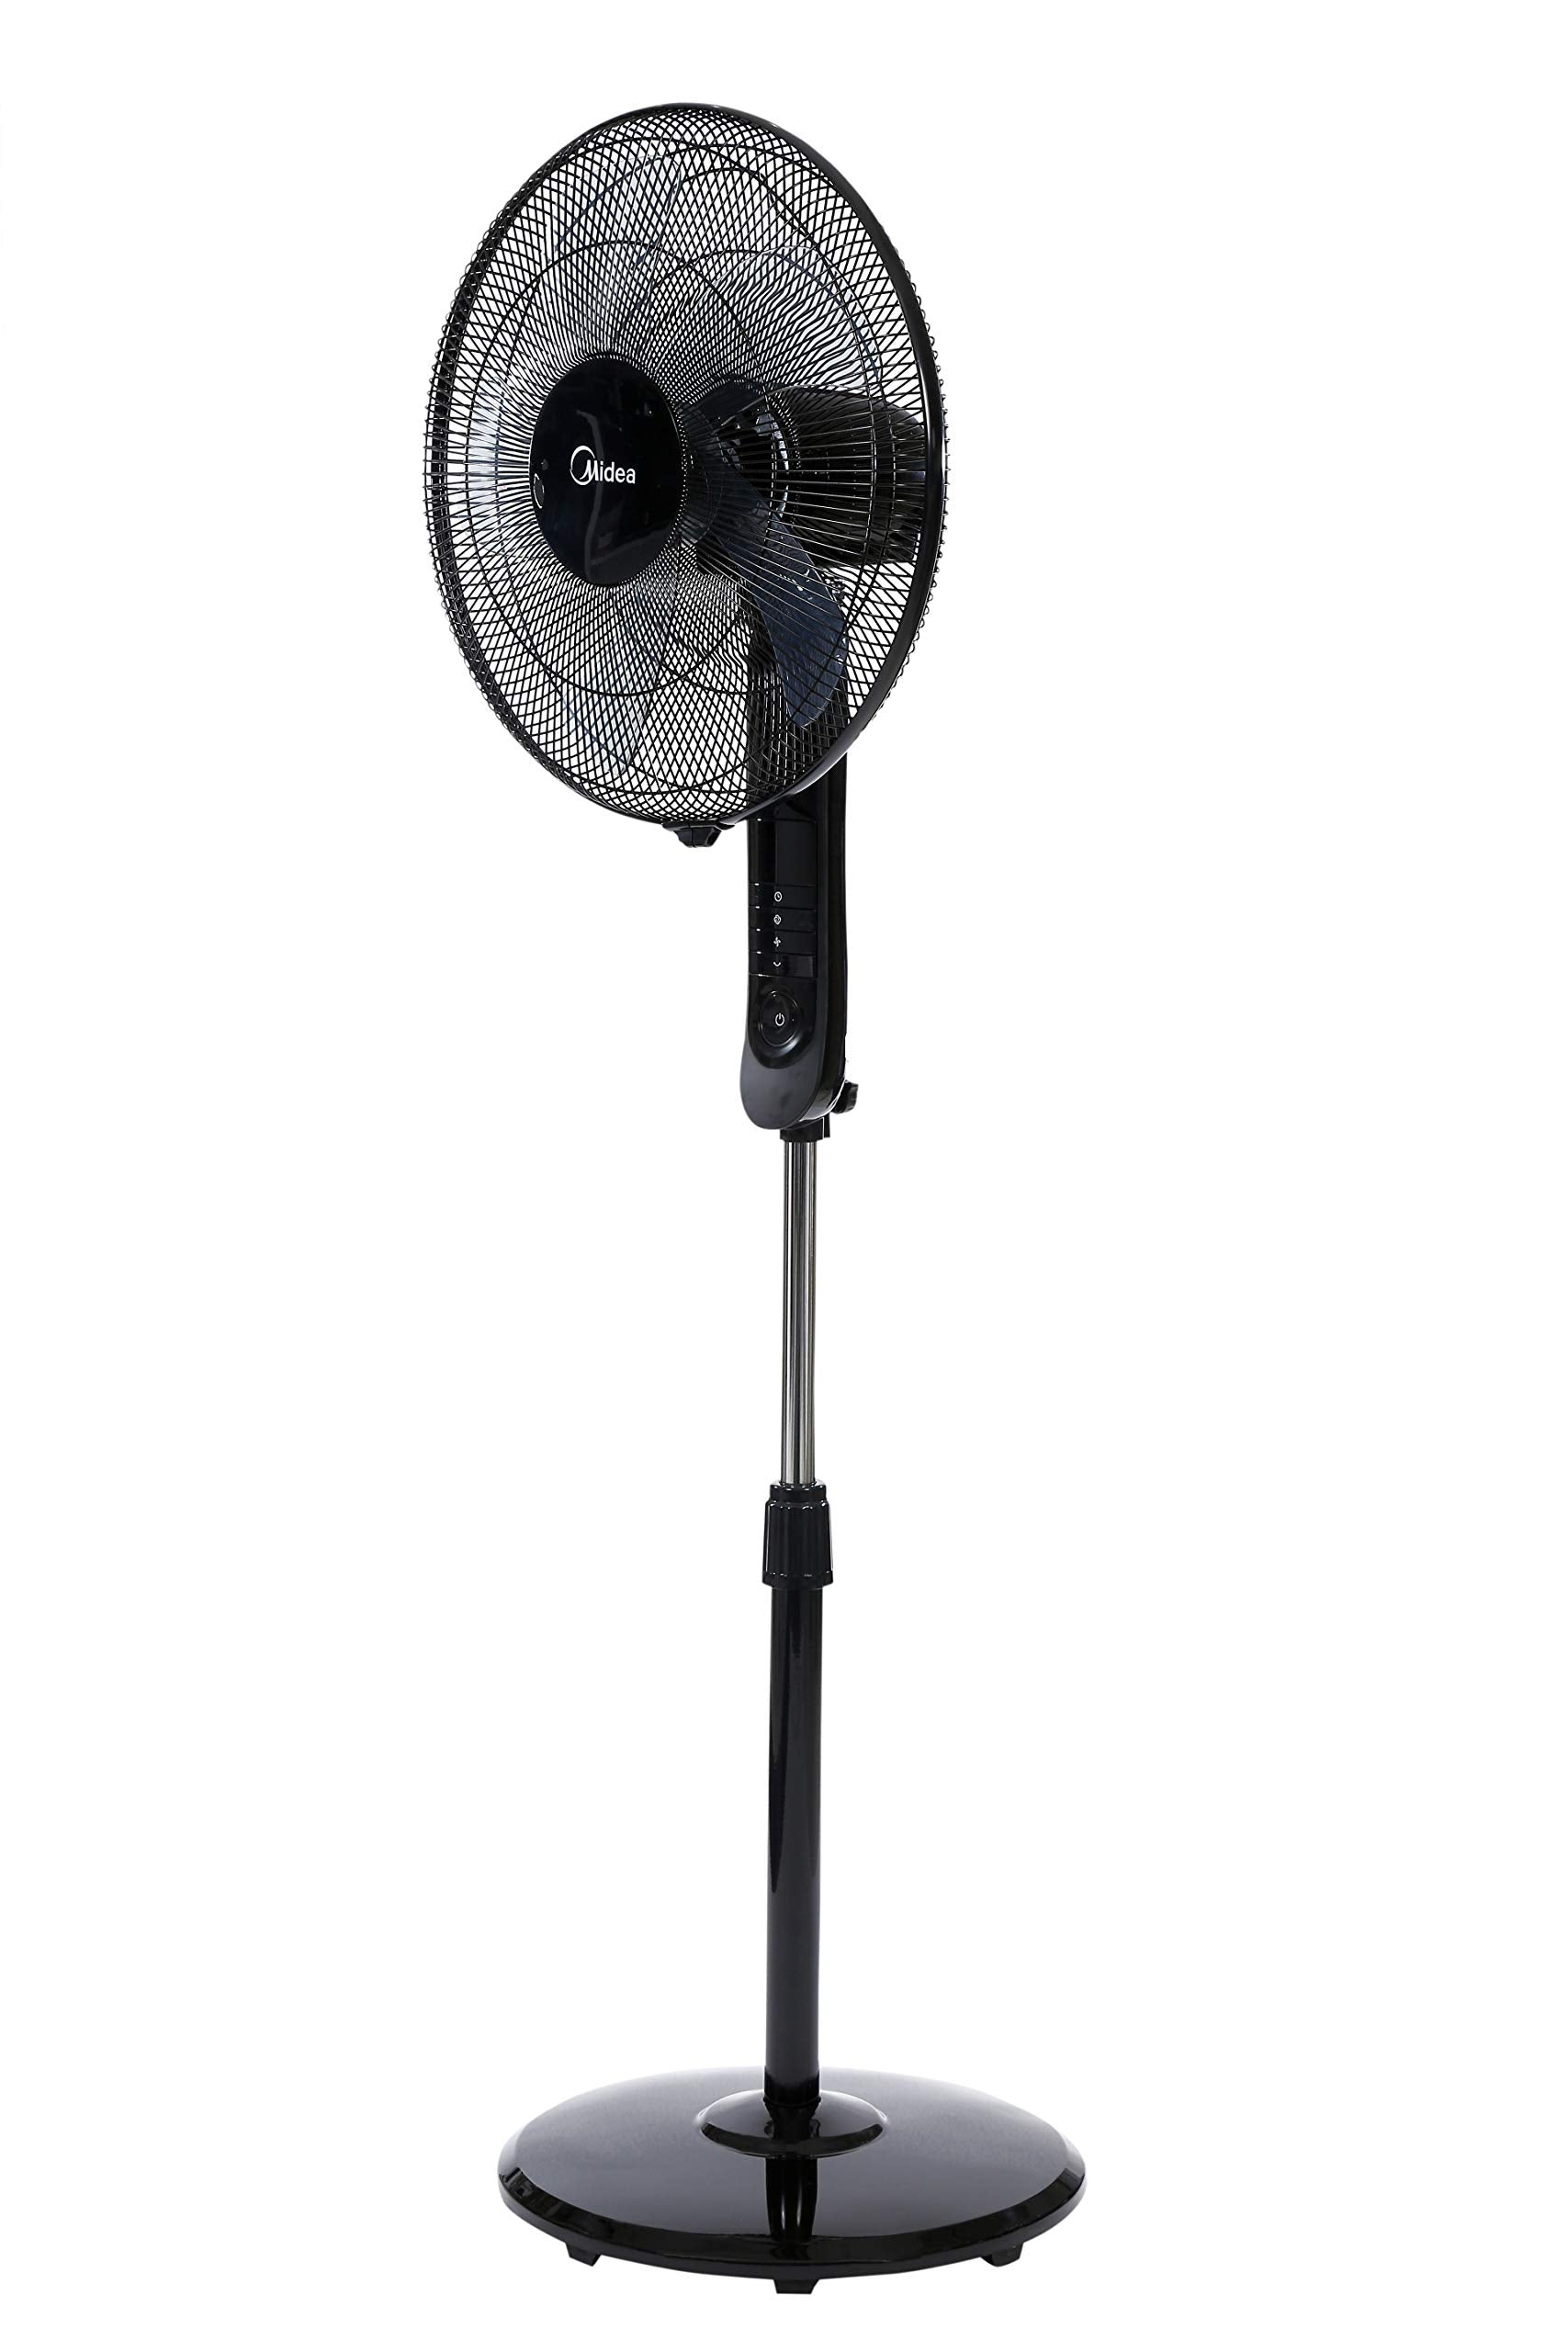 Midea Pedestal Stand Fan with Remote Control, 16 inch, 3D Oscillation Directions, 3 Speed Levels & Adjustable Height ميديا مروحة قائمة بقاعدة مع جهاز تحكم عن بعد، 16 انش، اتجاهات تذبذب ثلاثية الابعاد، 3 مستويات سرعة وارتفاع قابل للتعديل